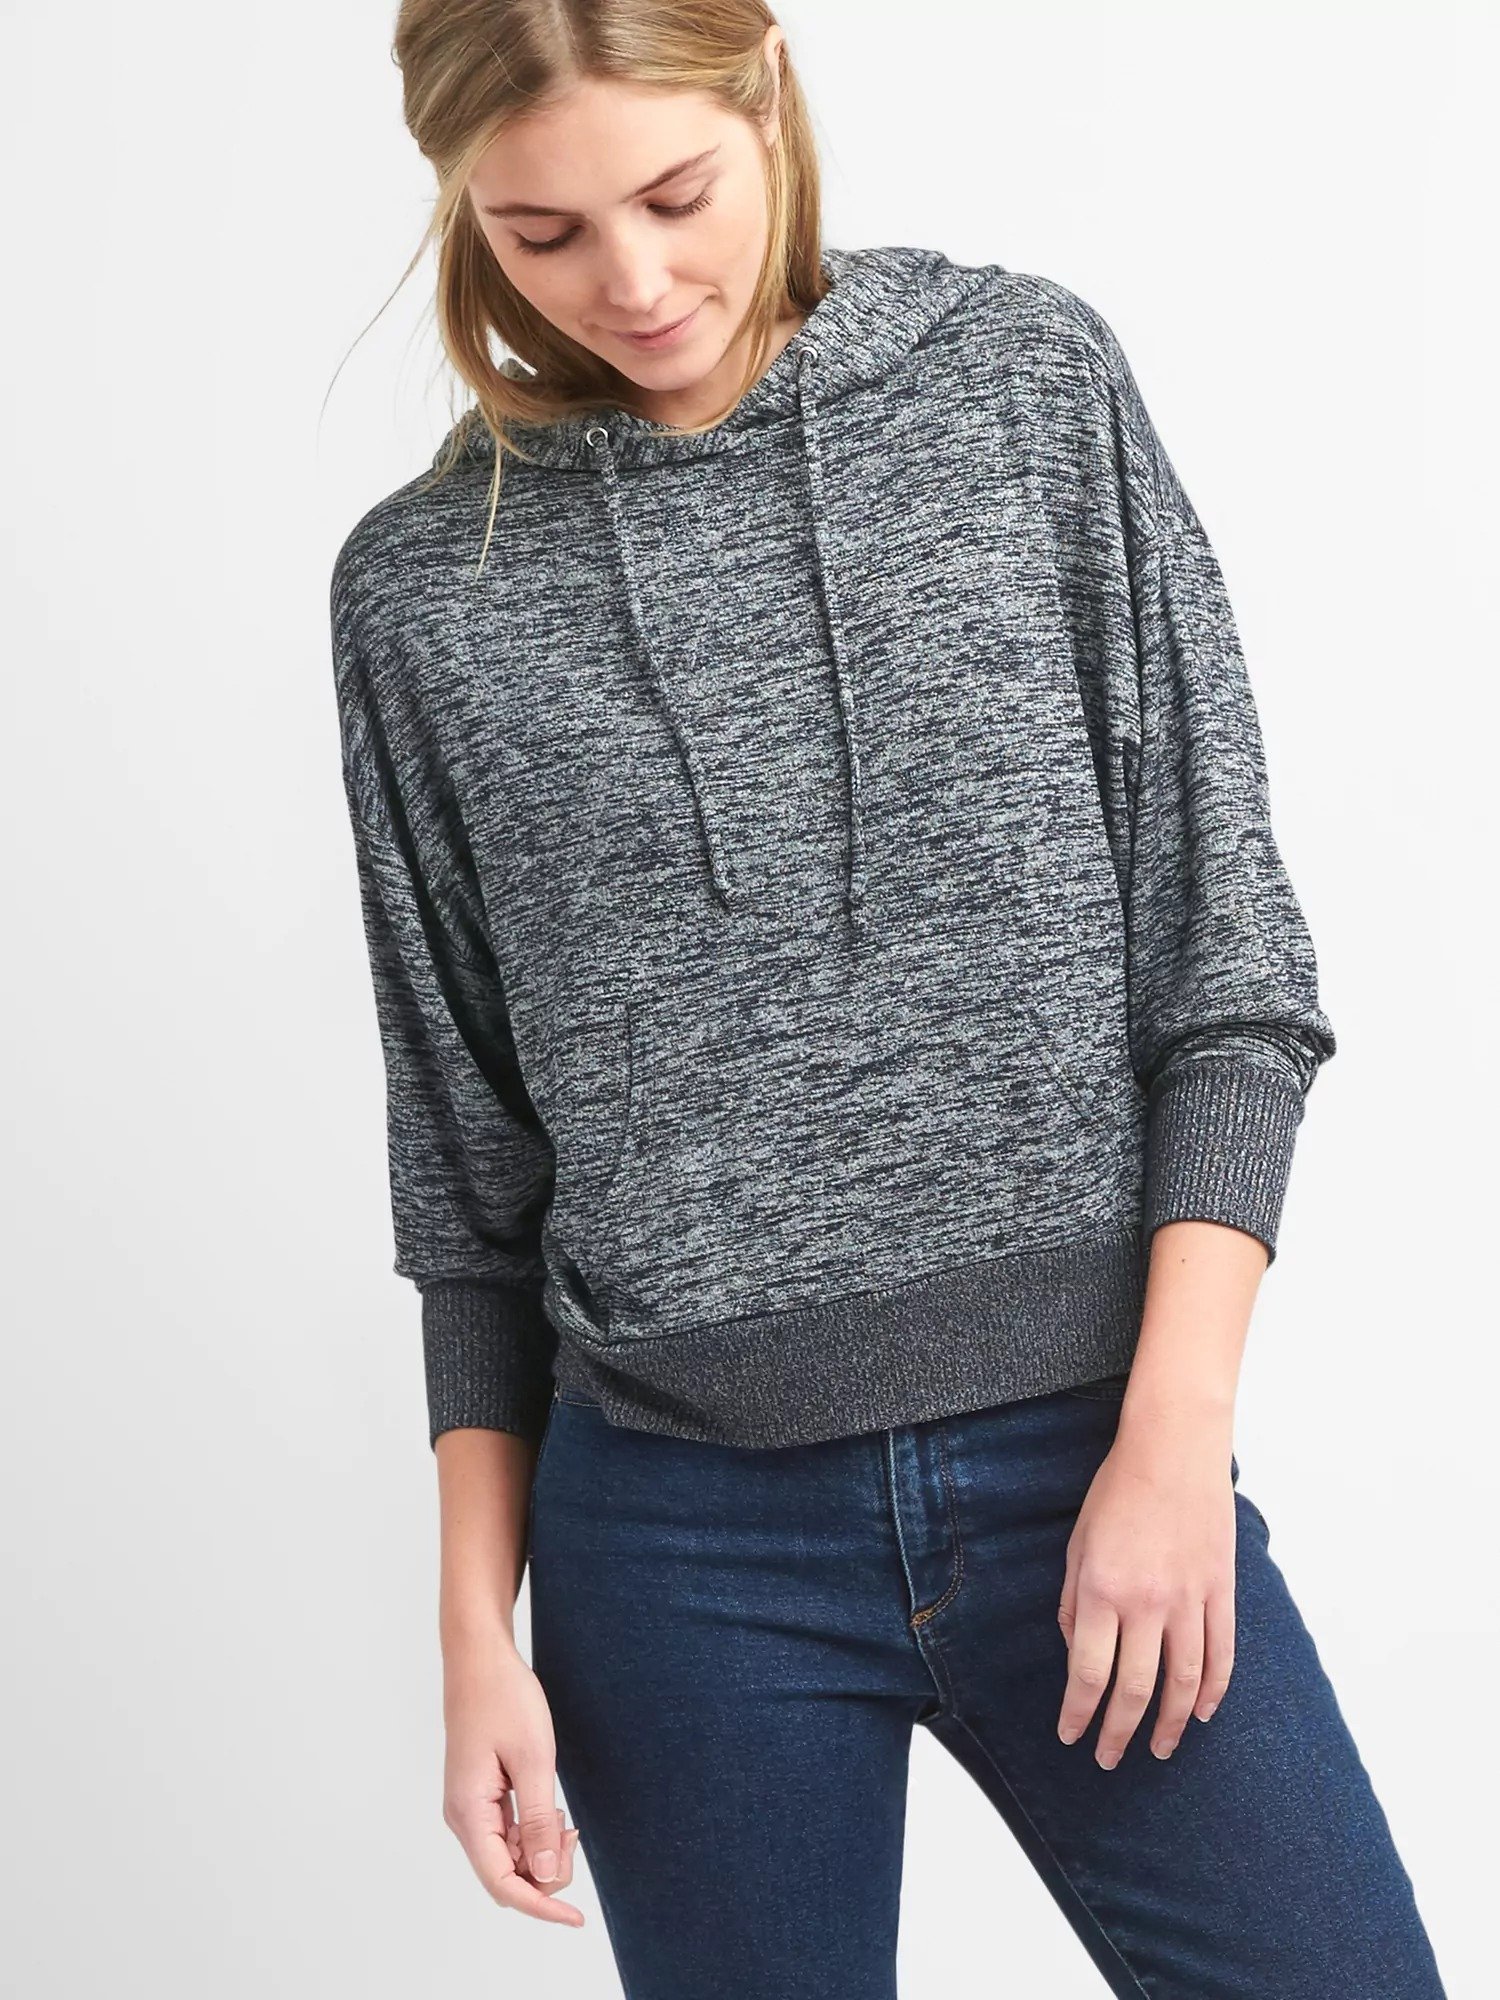 Softspun kapüşonlu sweatshirt product image